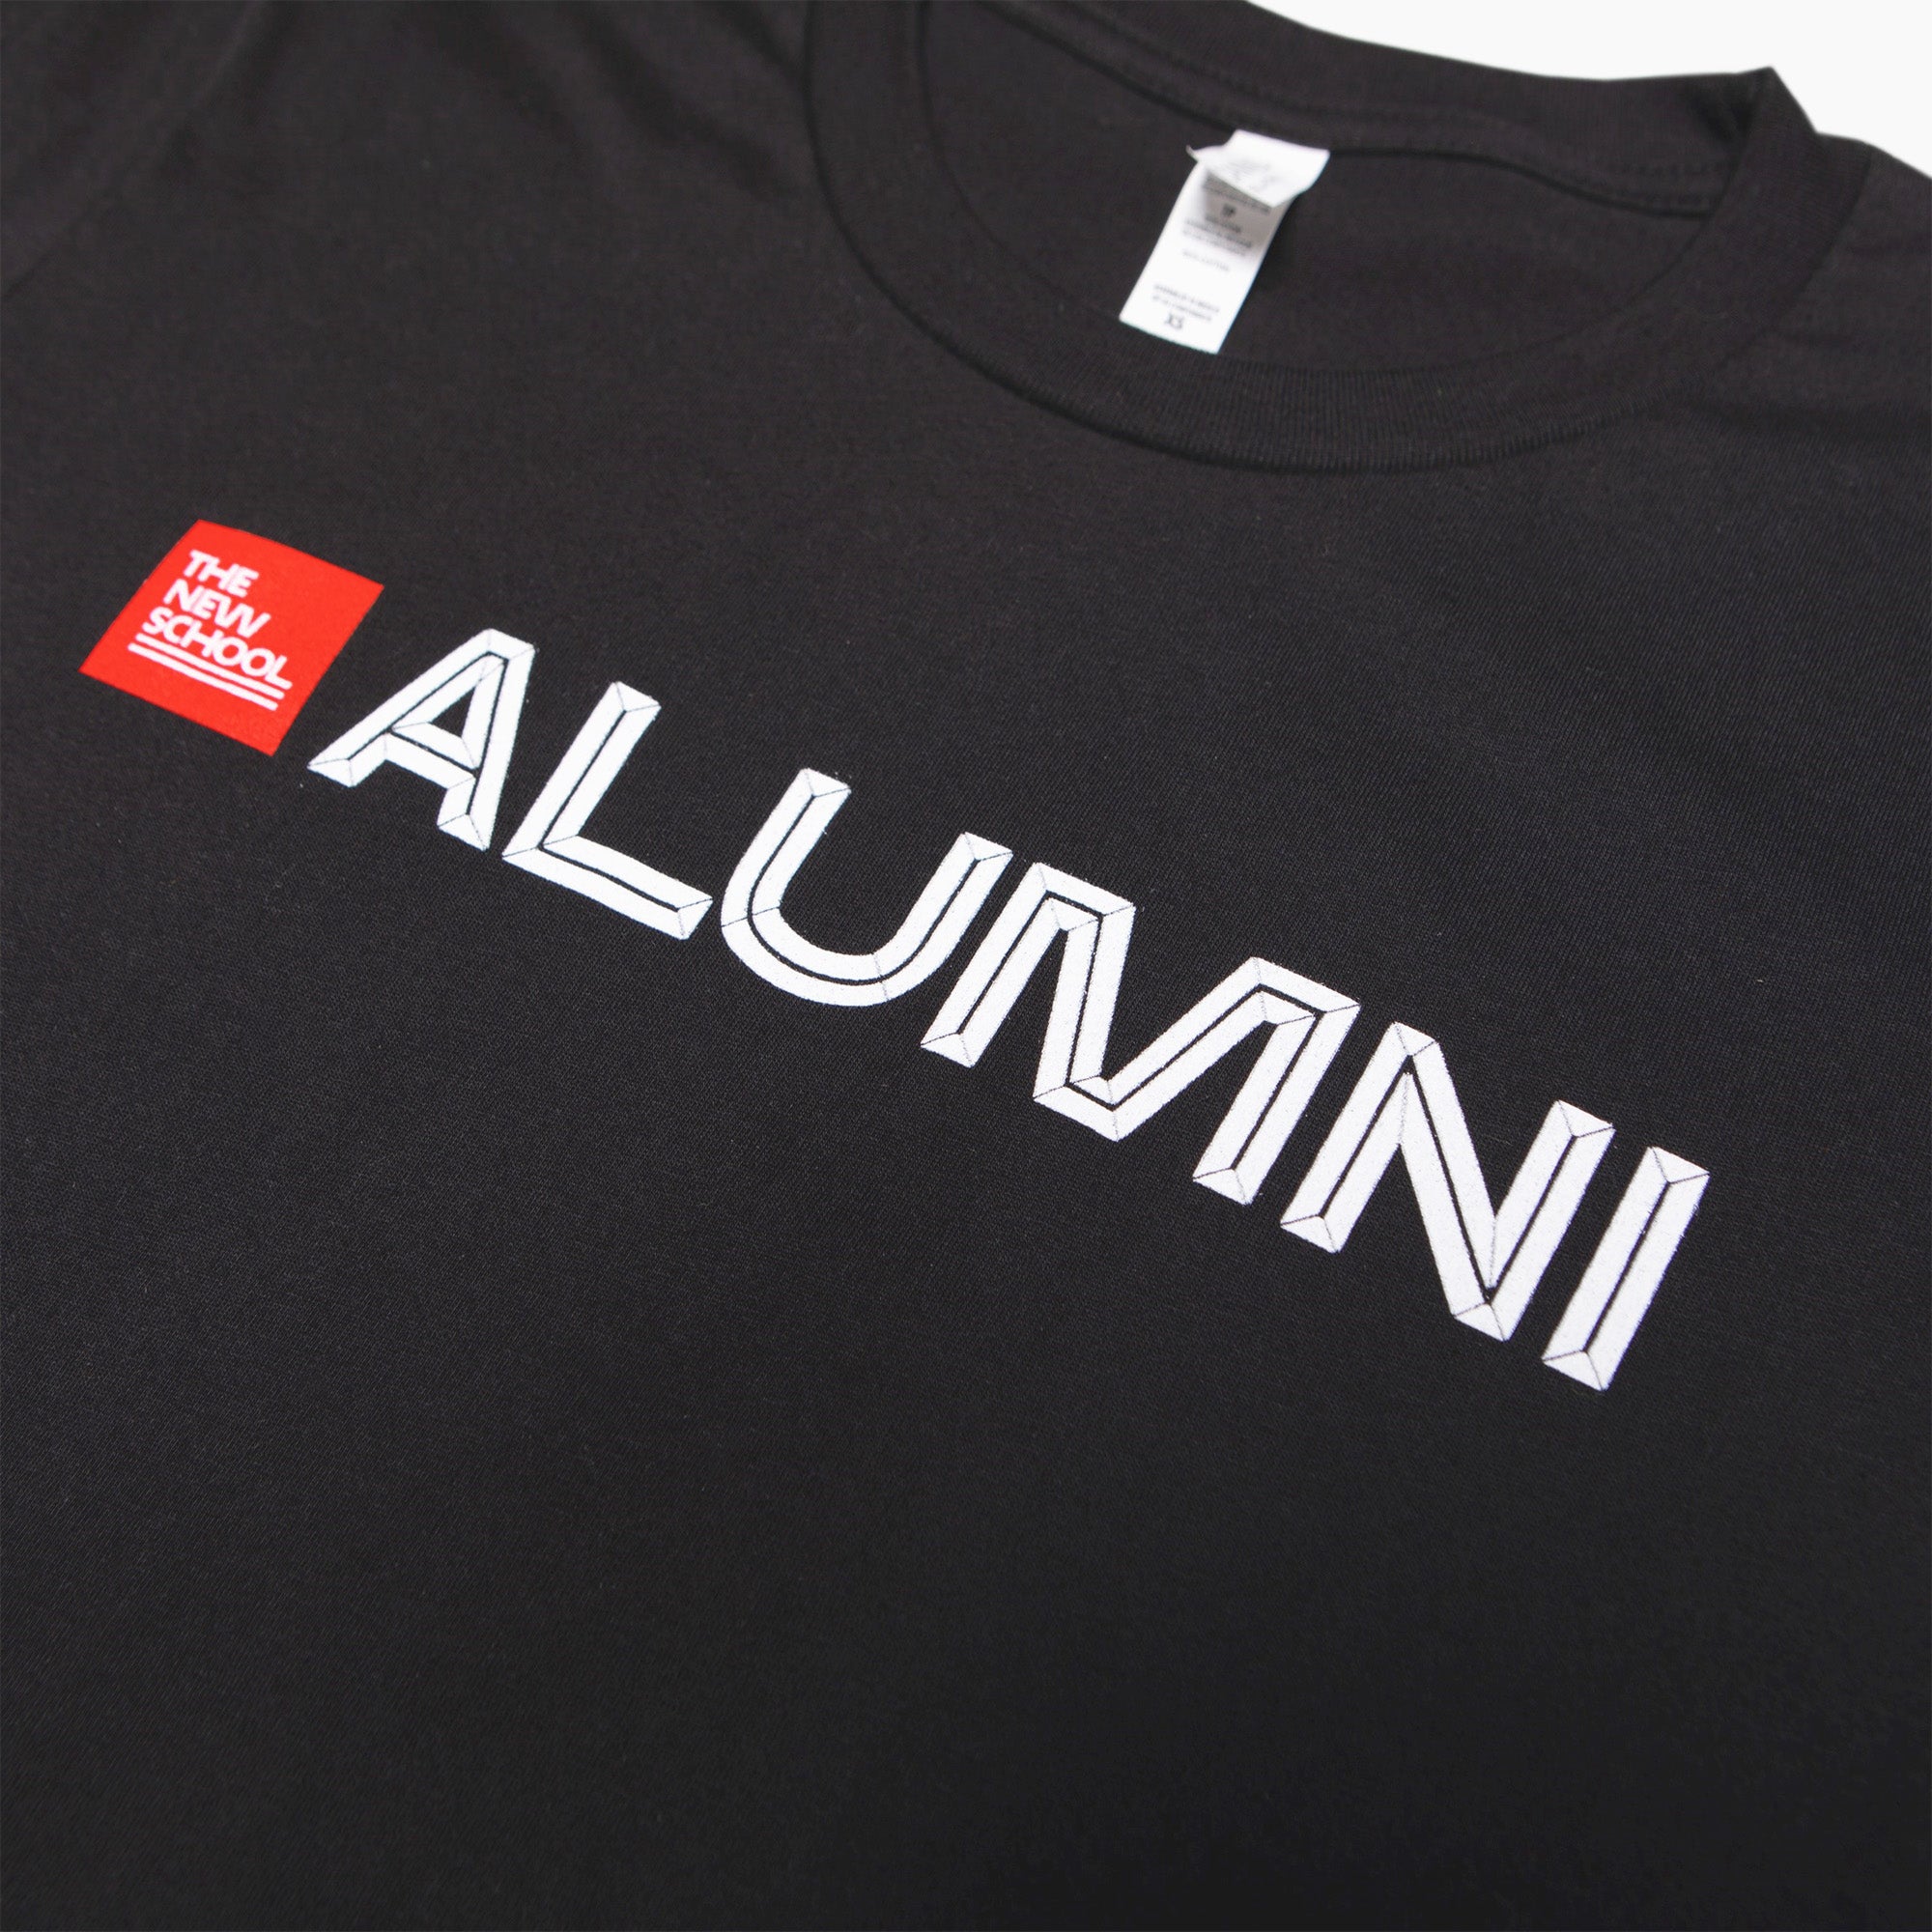 Alumni T-Shirt